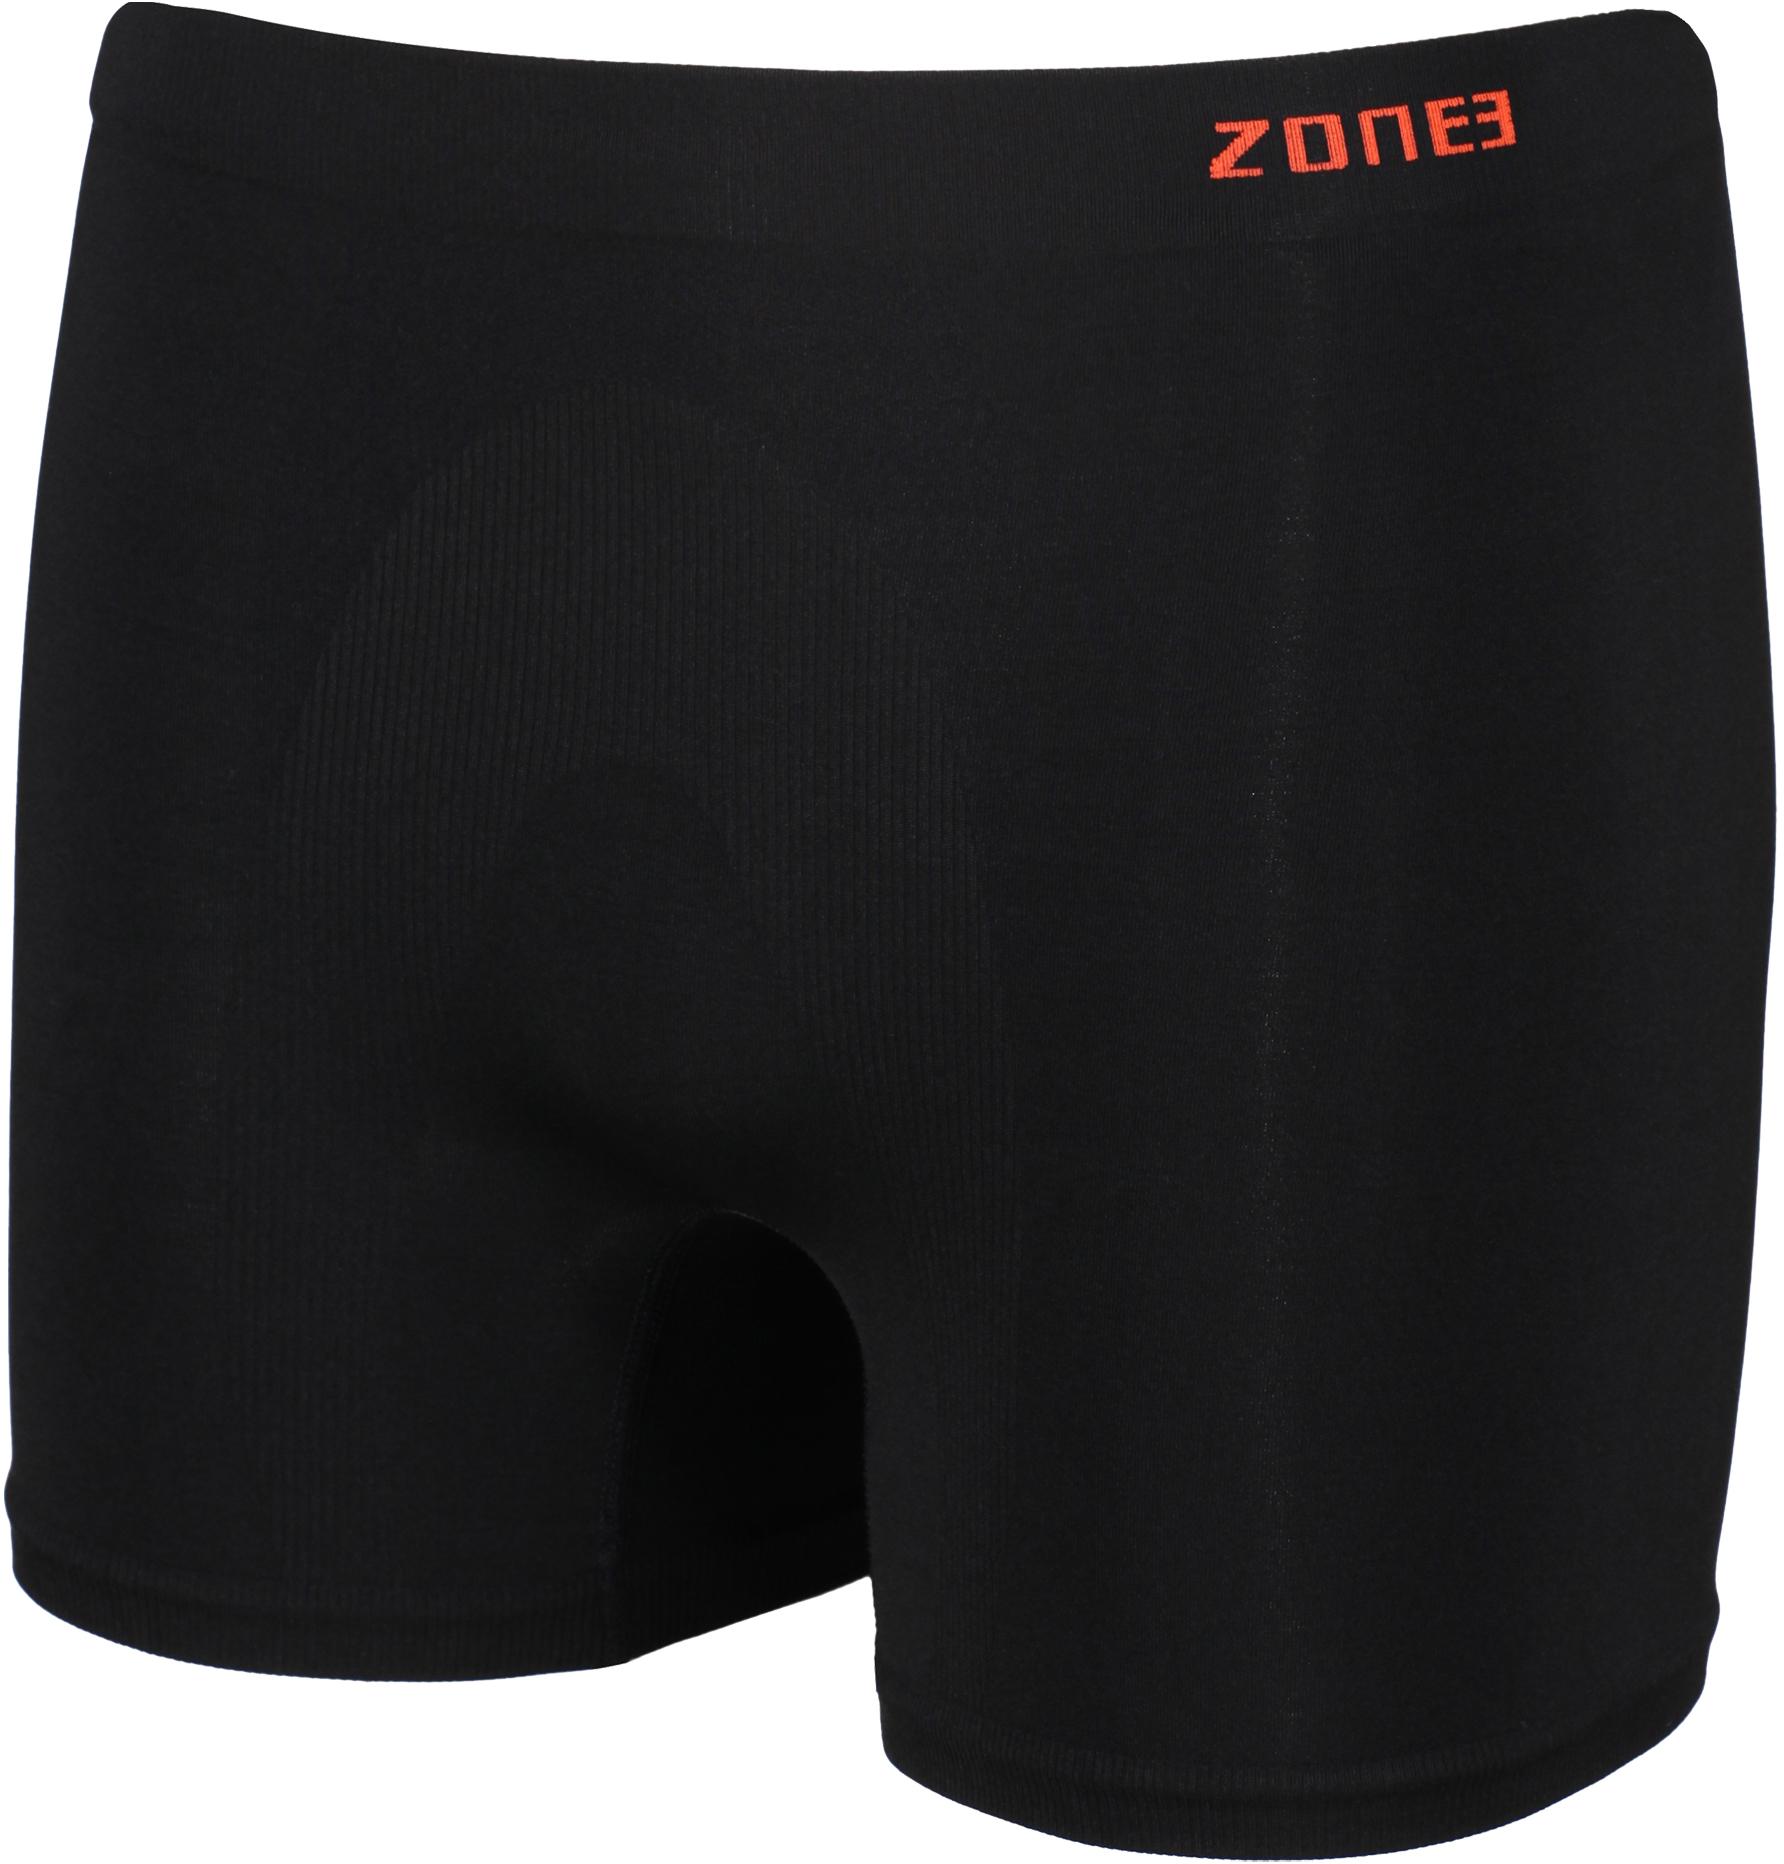 Zone3 Seamless Support Boxers - Black/orange